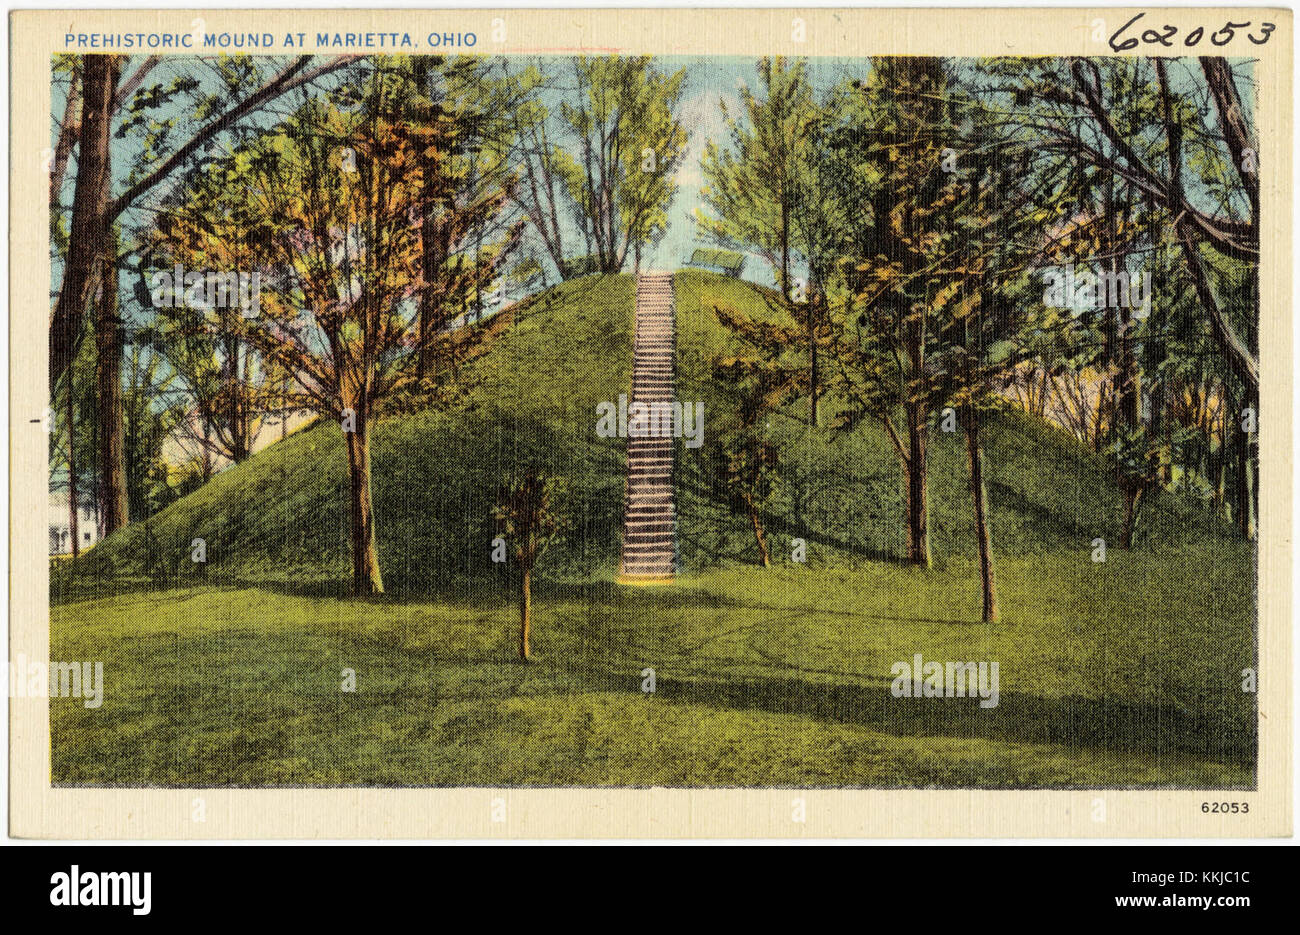 Prehistoric mound at Marietta, Ohio (62053) Stock Photo